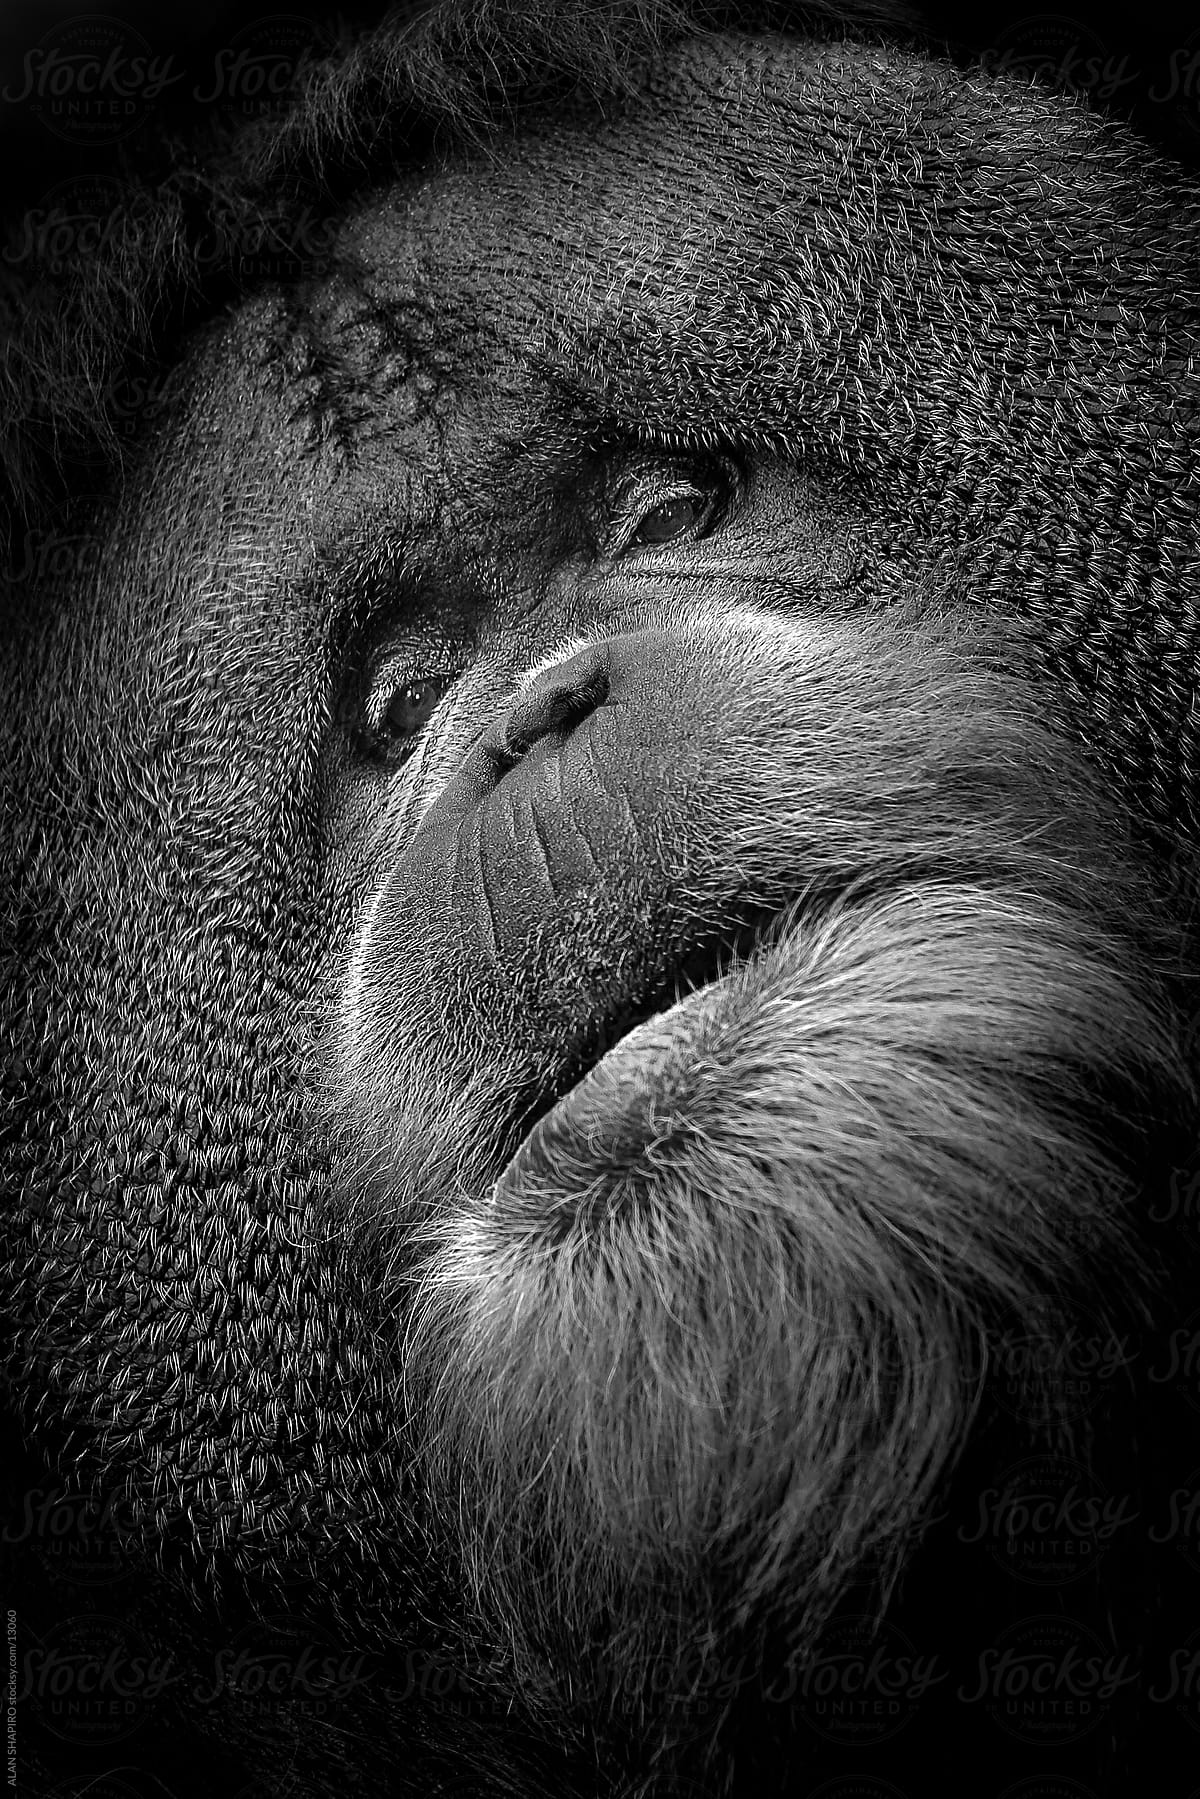 Male Orangutan Portrait By Stocksy Contributor ALAN SHAPIRO Stocksy